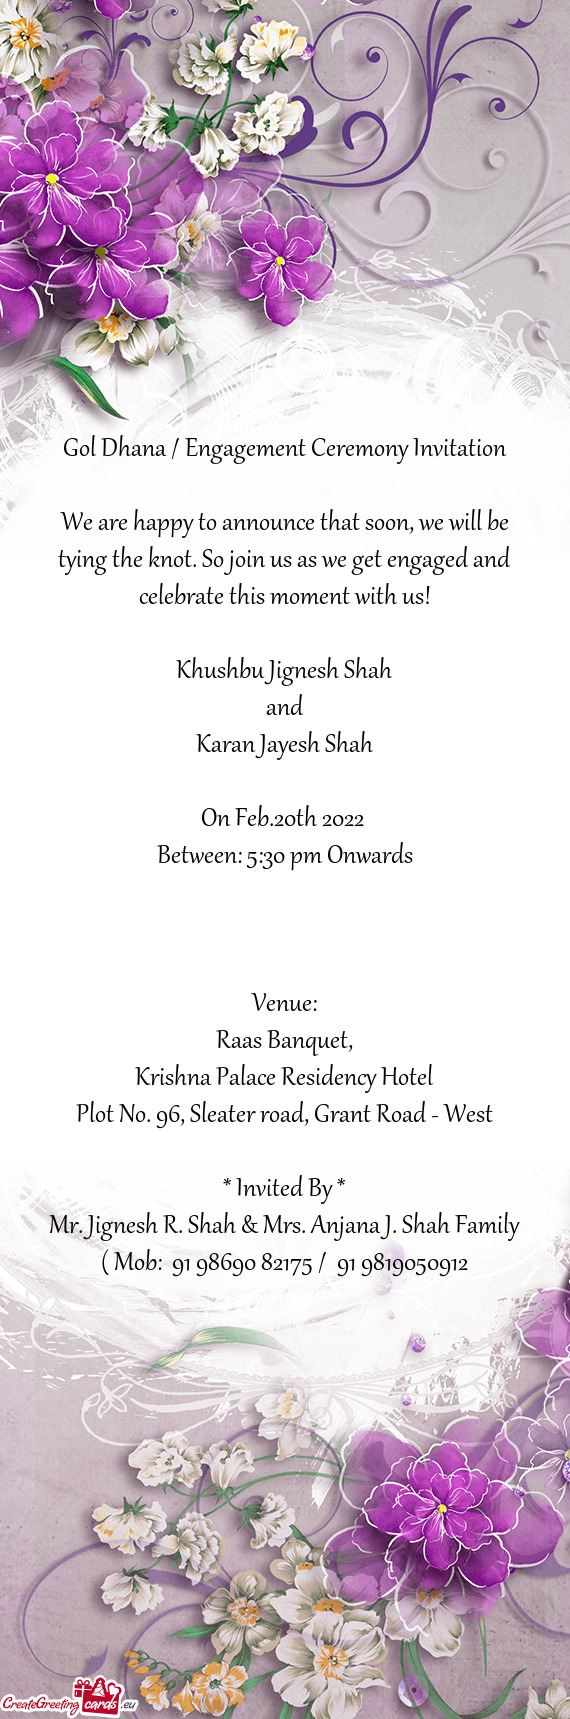 Gol Dhana / Engagement Ceremony Invitation